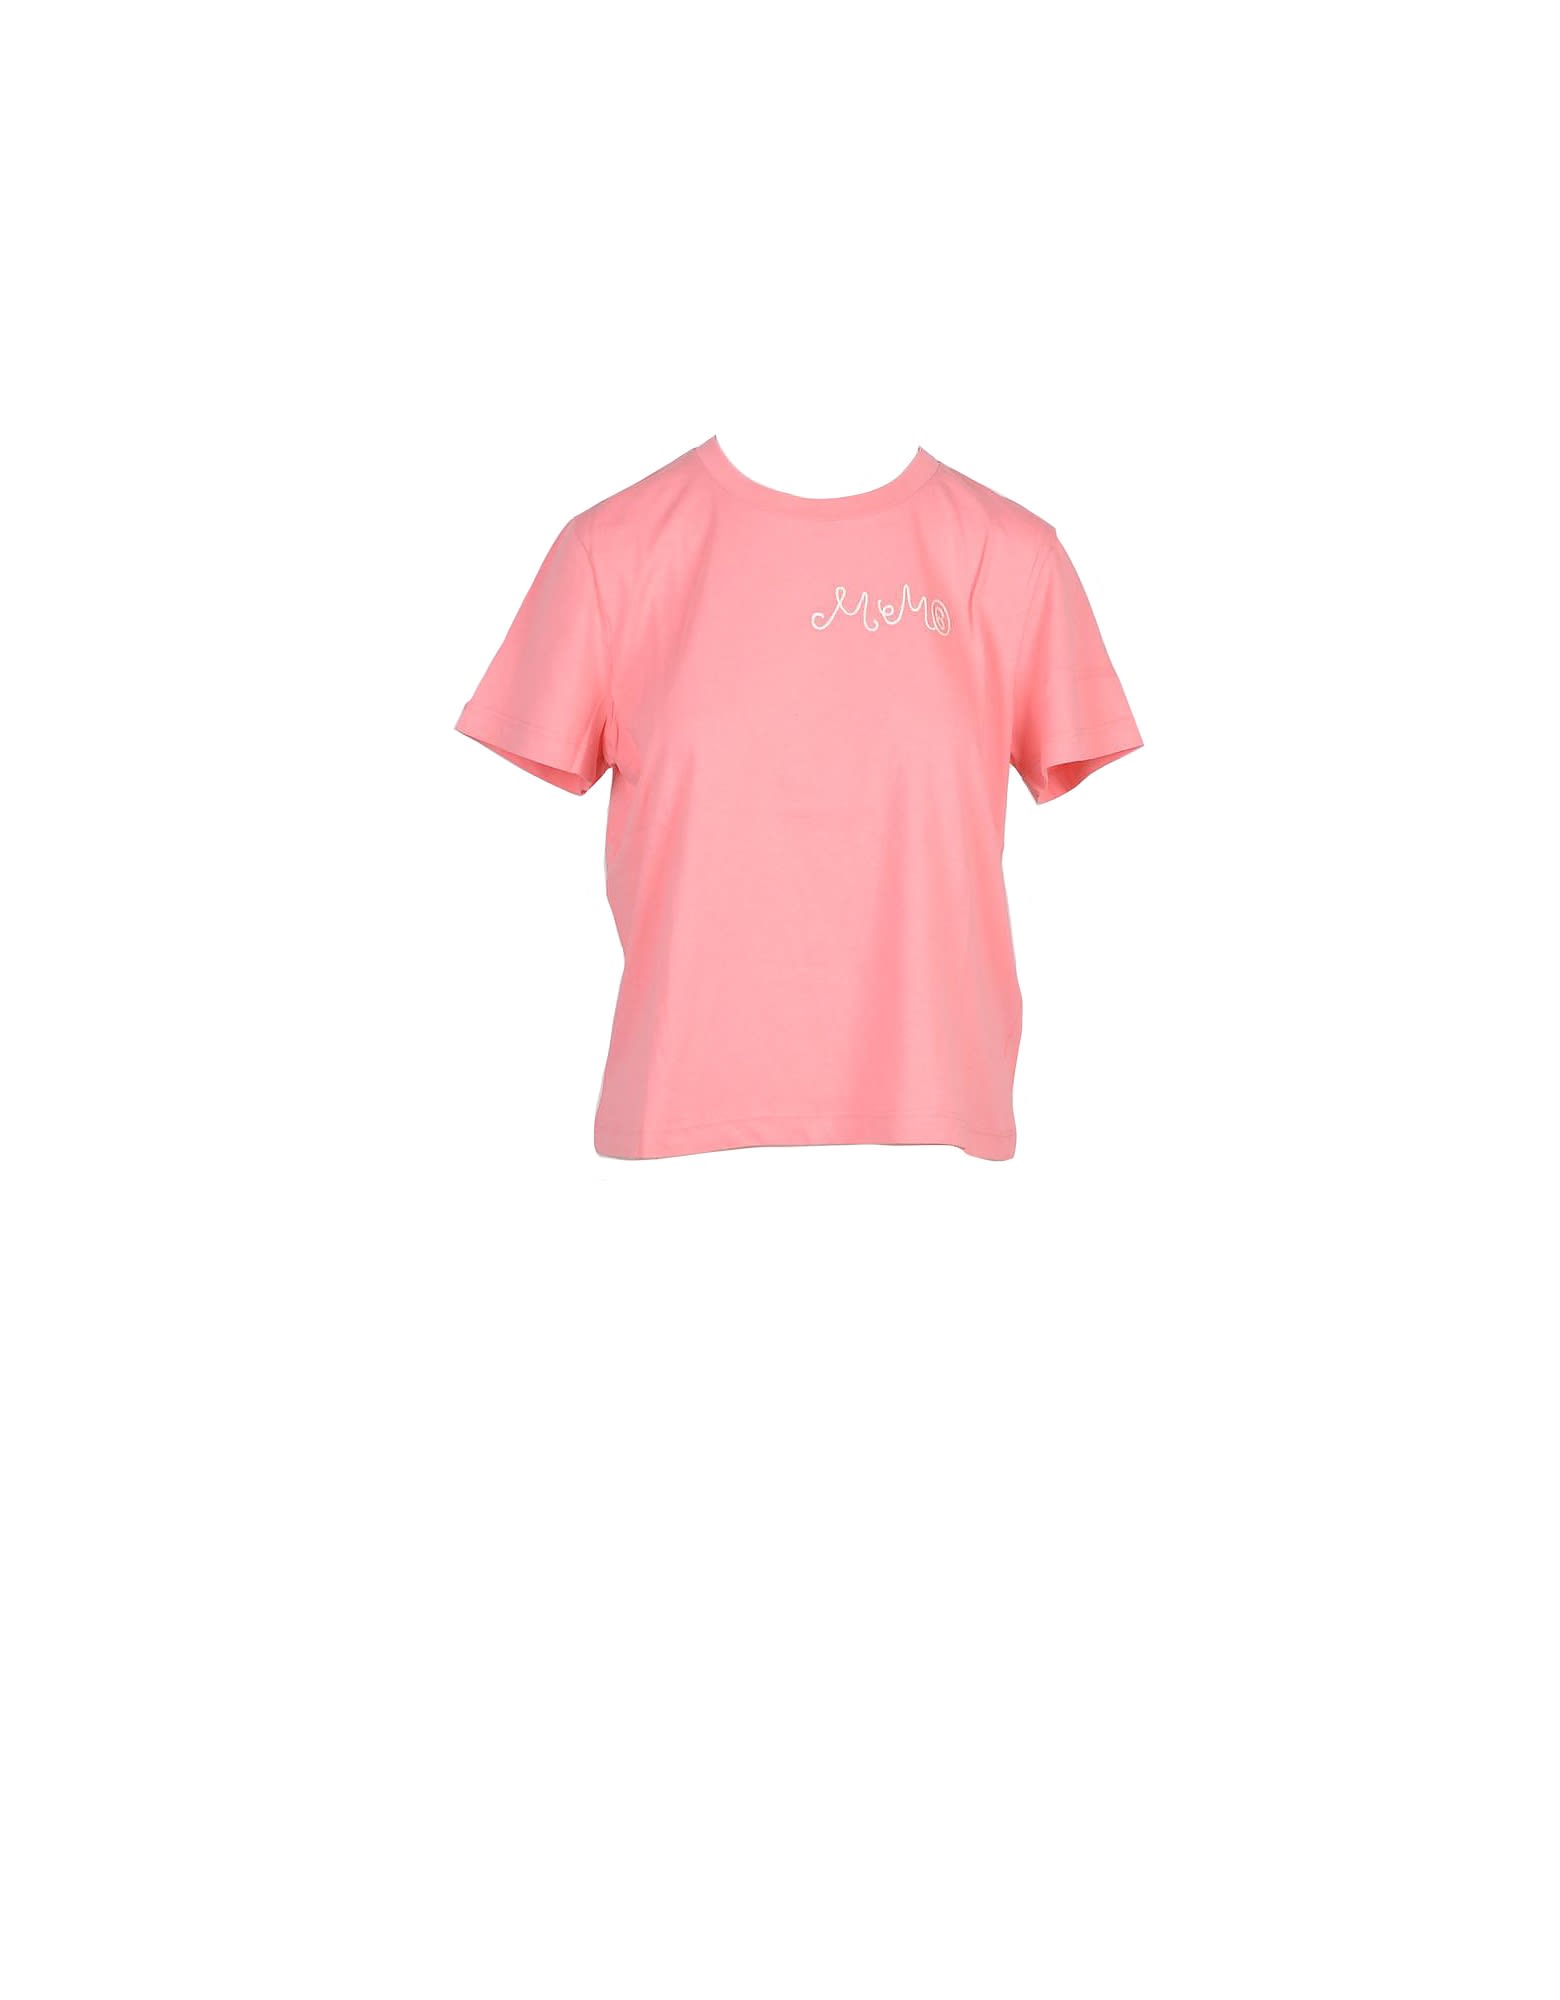 MM6 Maison Margiela Mm6 Maison Martin Margiela Womens Pink T-shirt